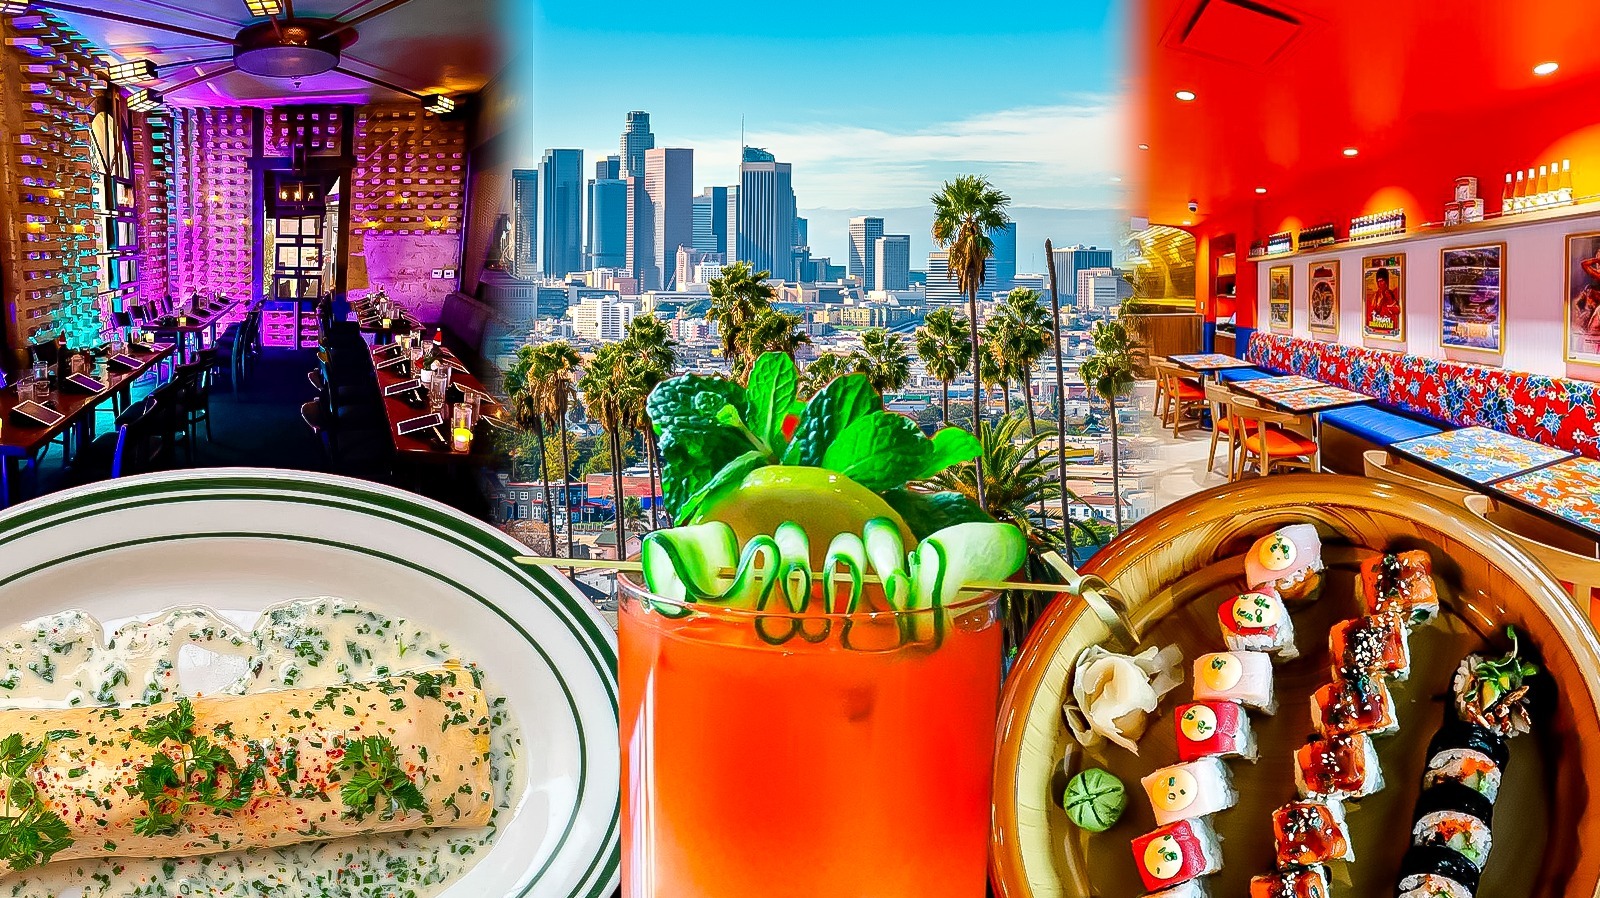 20 Best Restaurants In West Hollywood